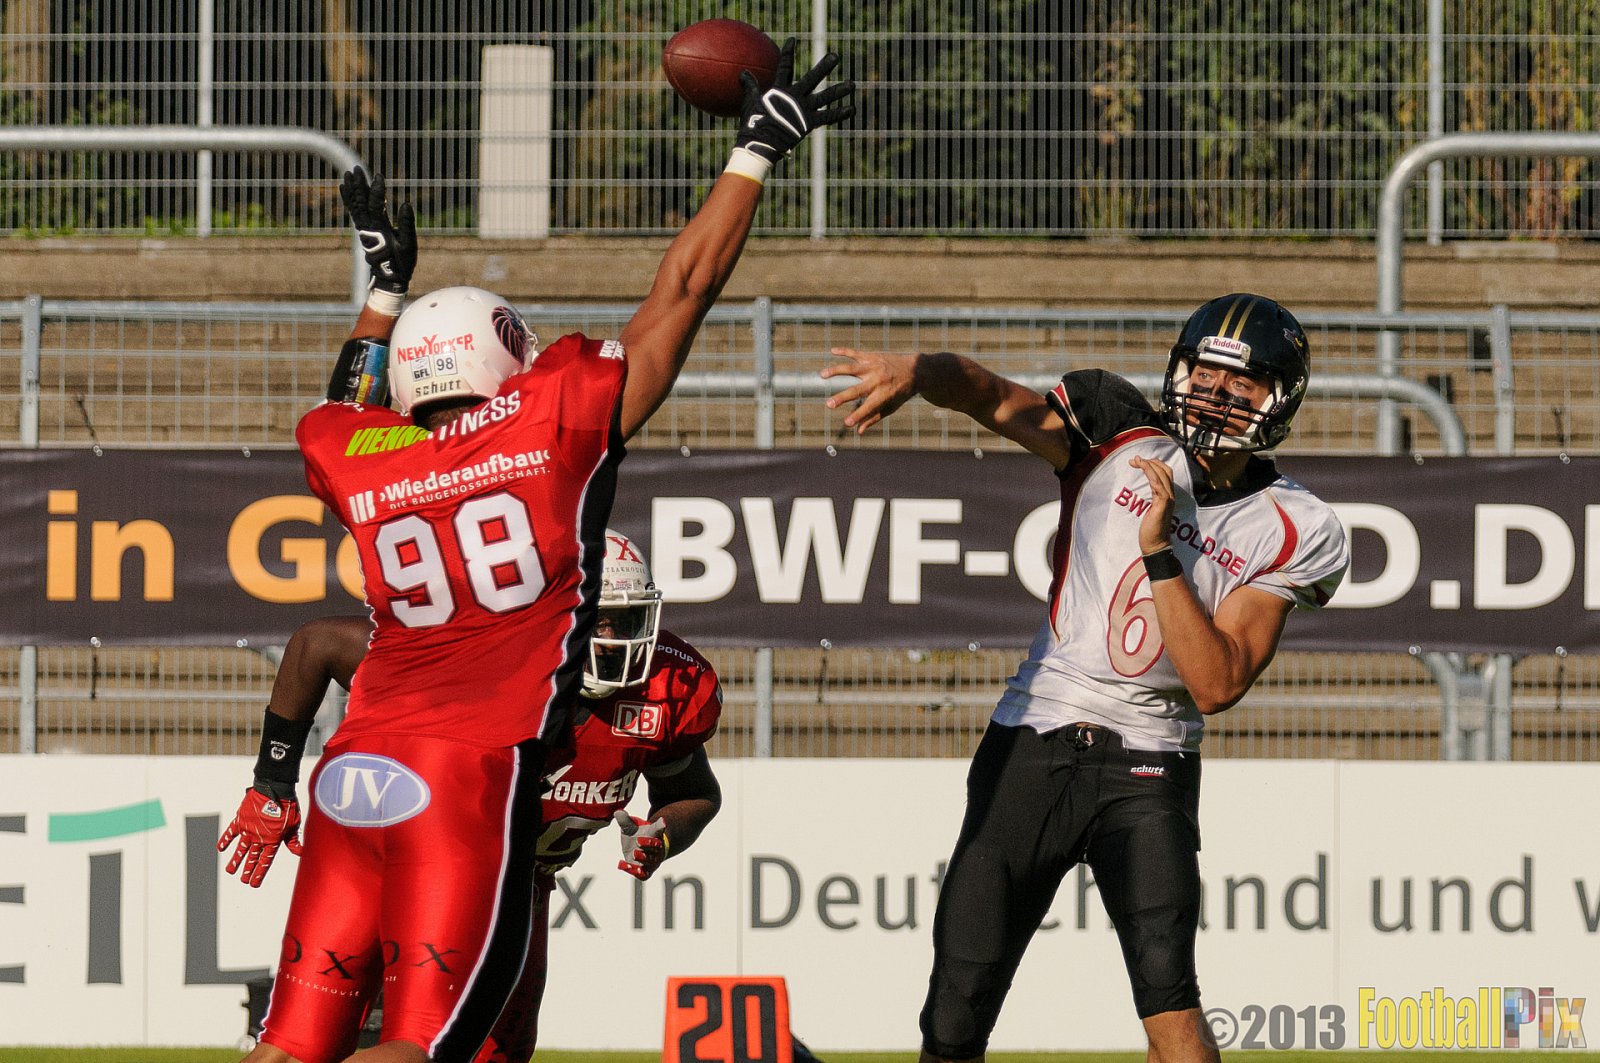 Cologne Falcons vs. Braunschweig FFC (New Yorker Lions) - 20.07.2013 GFL Nord: Cologne Falcons vs. Braunschweig FFC (New Yorker Lions) (13:56) 